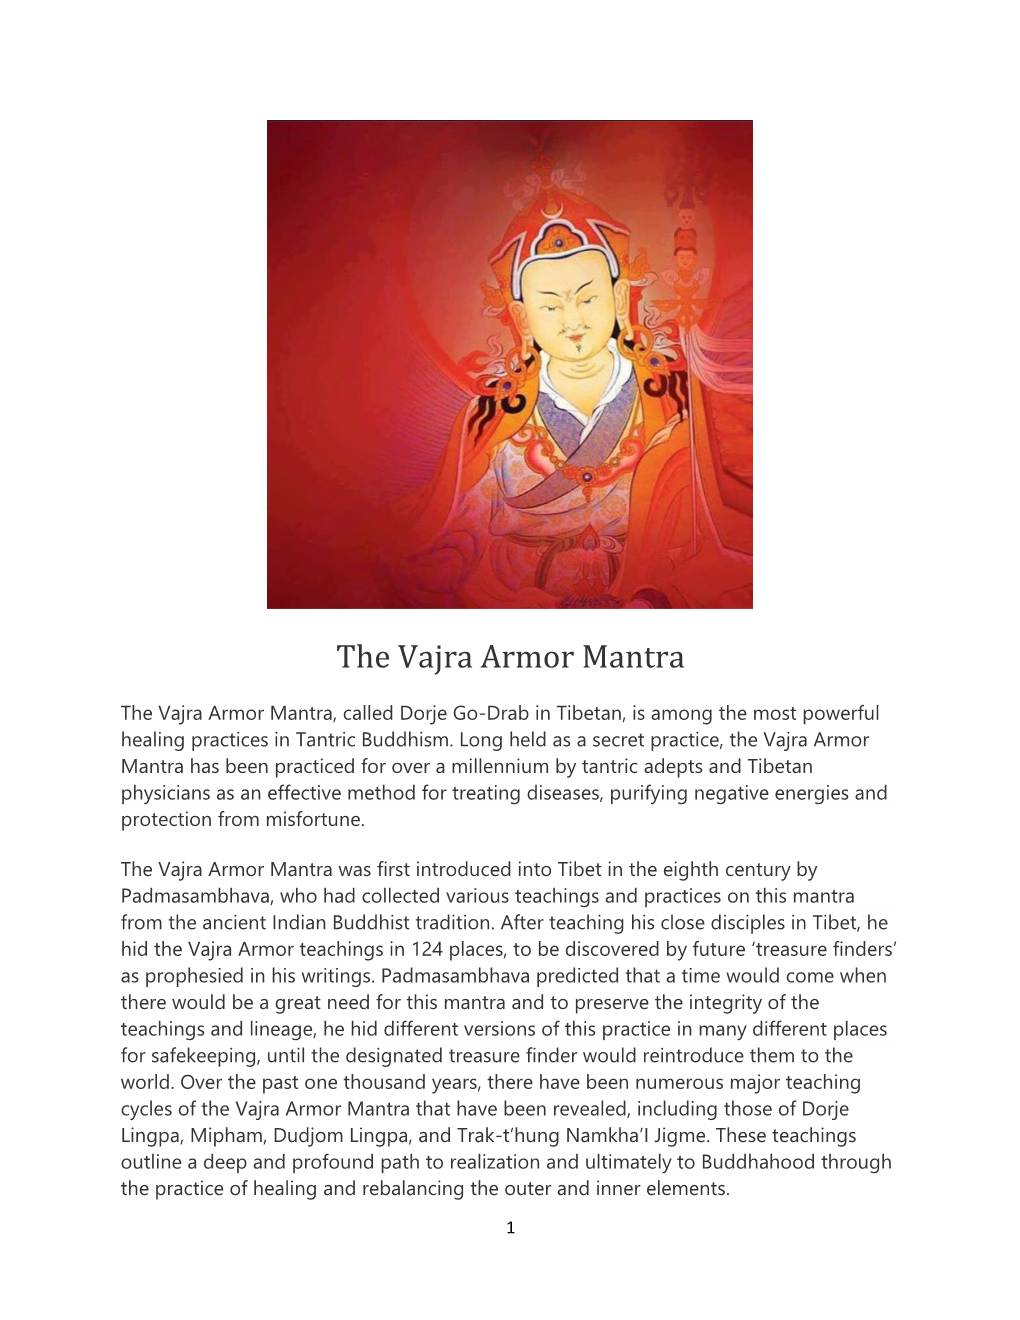 The Vajra Armor Mantra